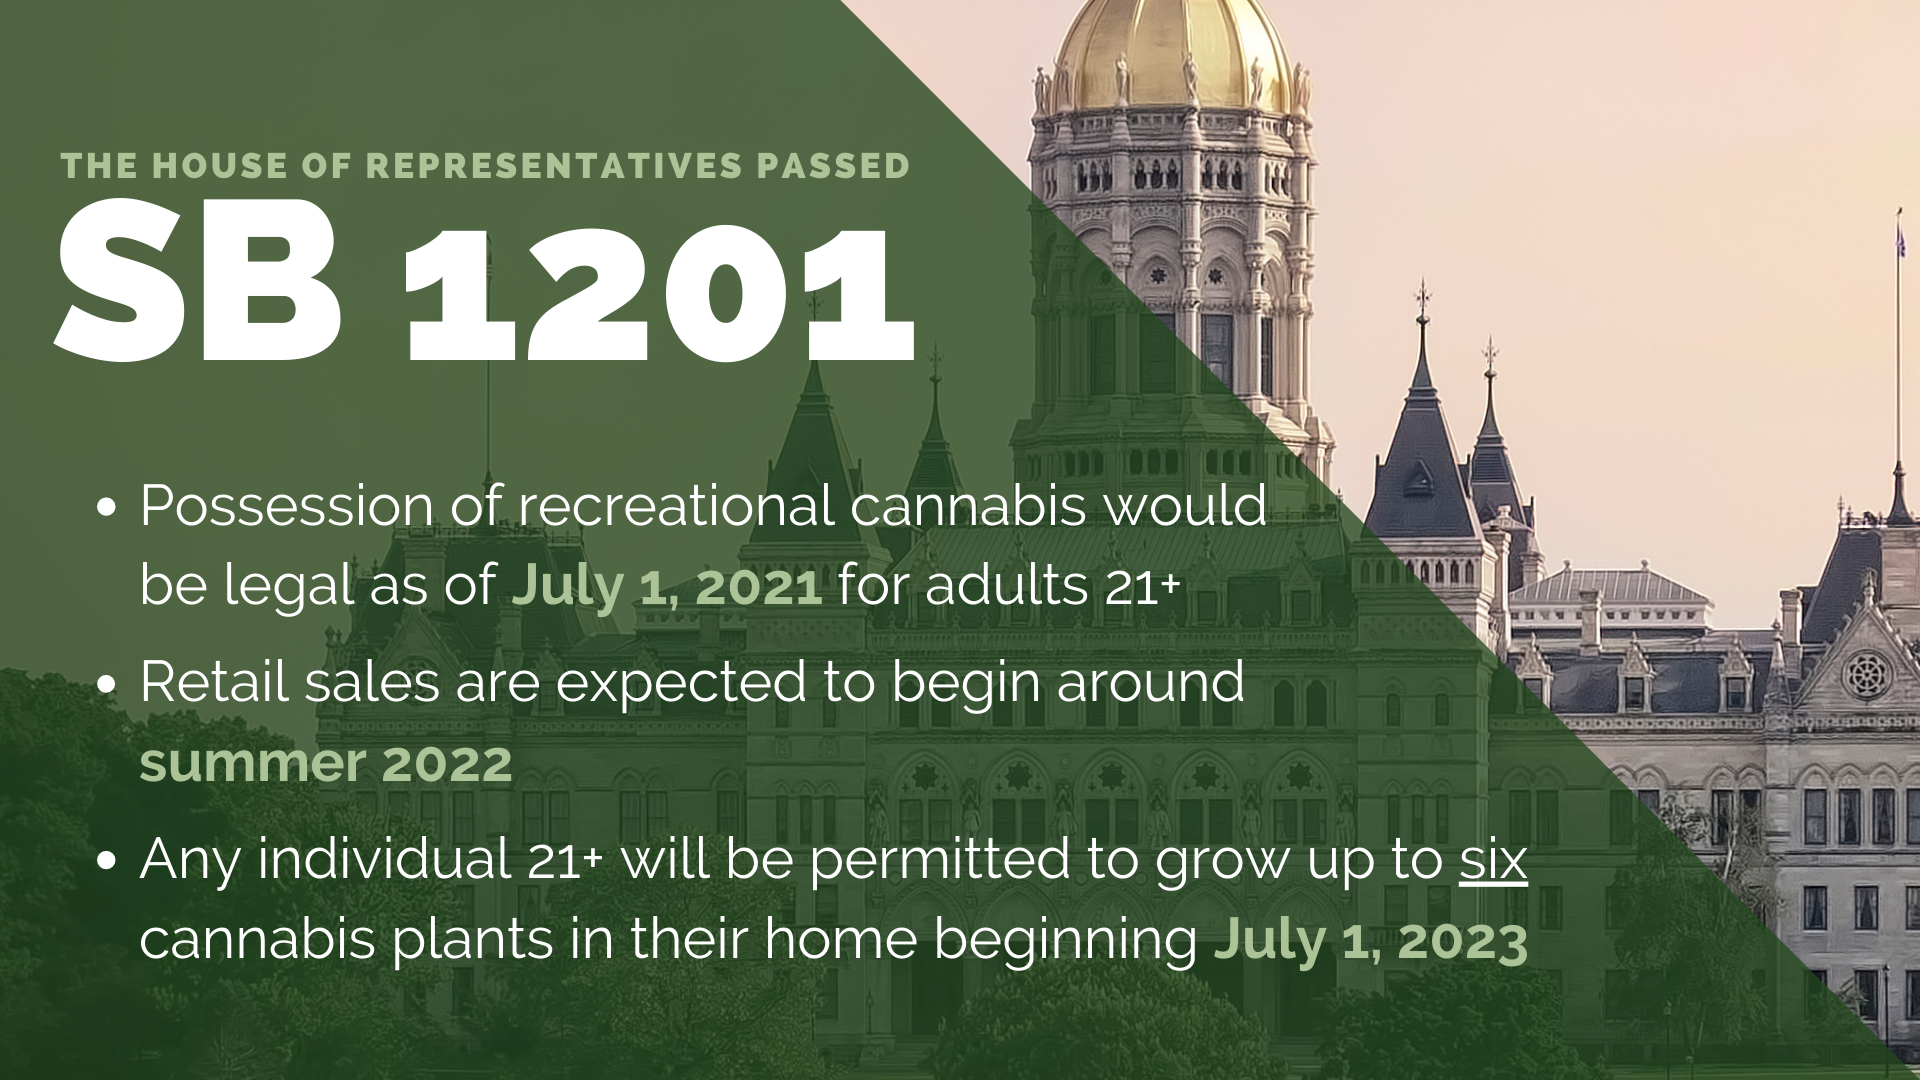 SB1201 a.k.a the Cannabis Bill (Equity)